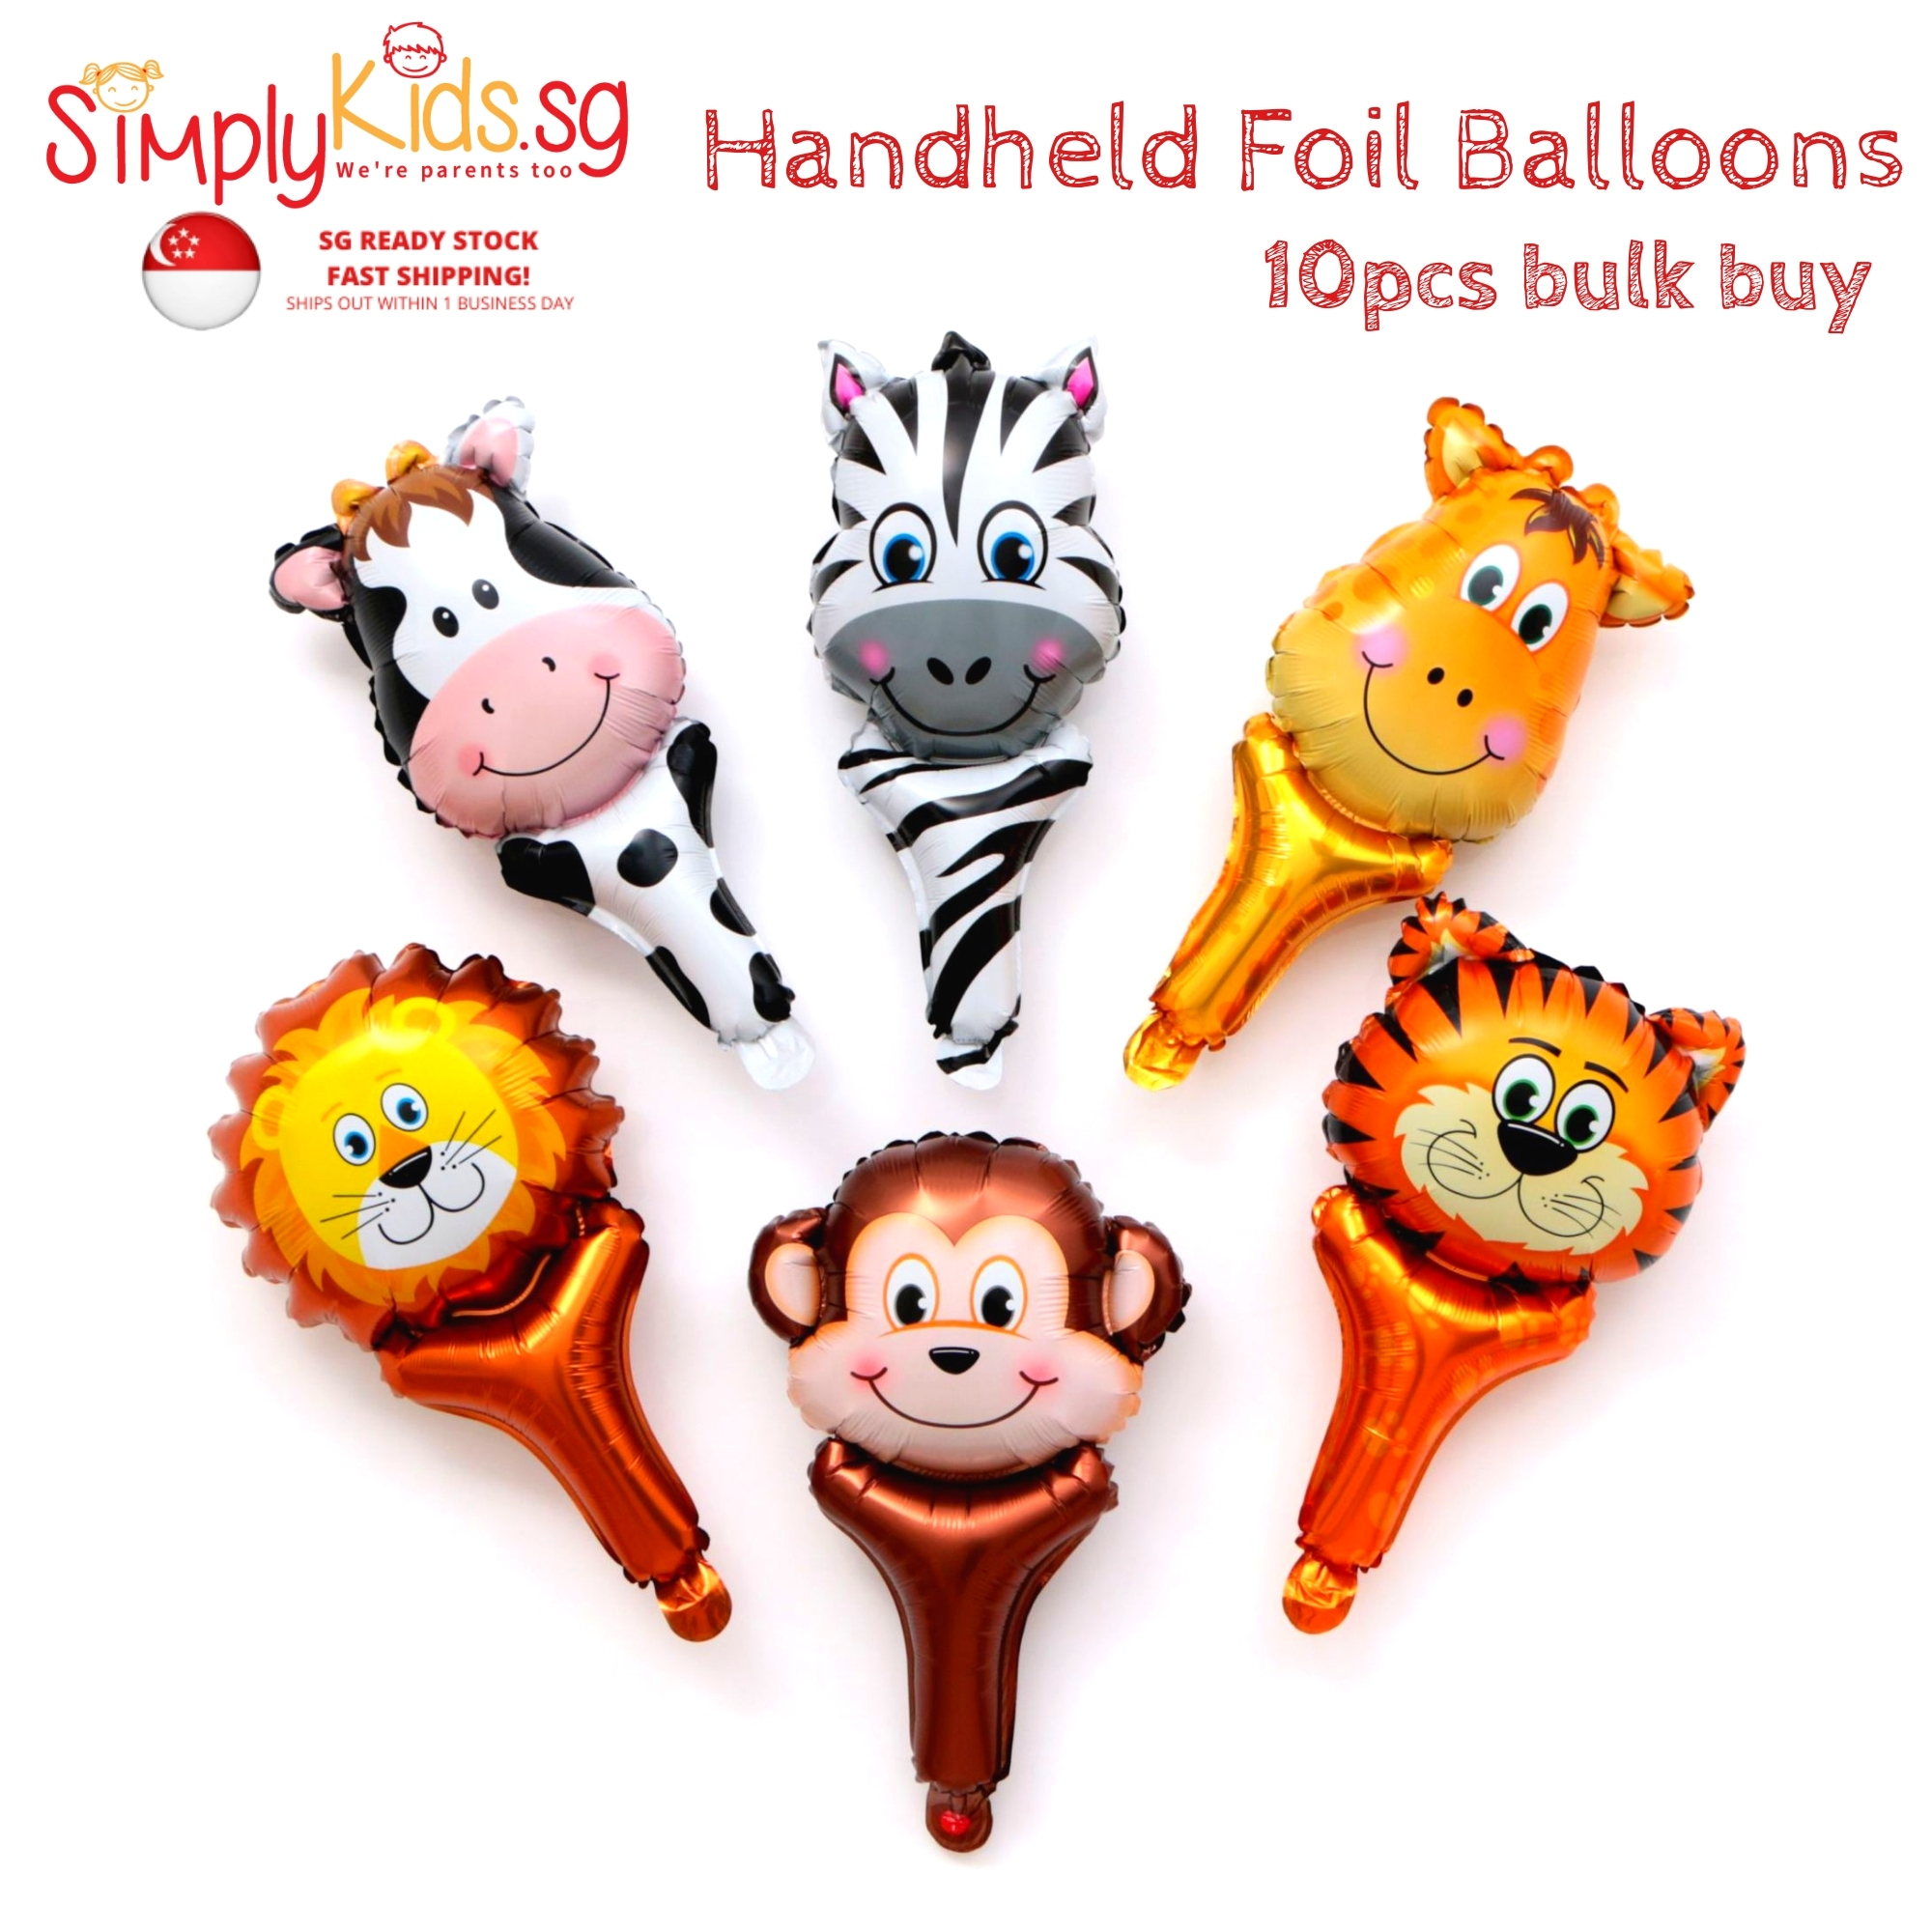 ® [SG SELLER] 10pcs / 20pcs Bulk Buy Handheld Animal Foil  Balloons - Birthday Goodie Bag / Birthday Party Packs / Party Return Gifts  / Christmas - SG READY STOCK, FAST SHIPPING! | Lazada Singapore